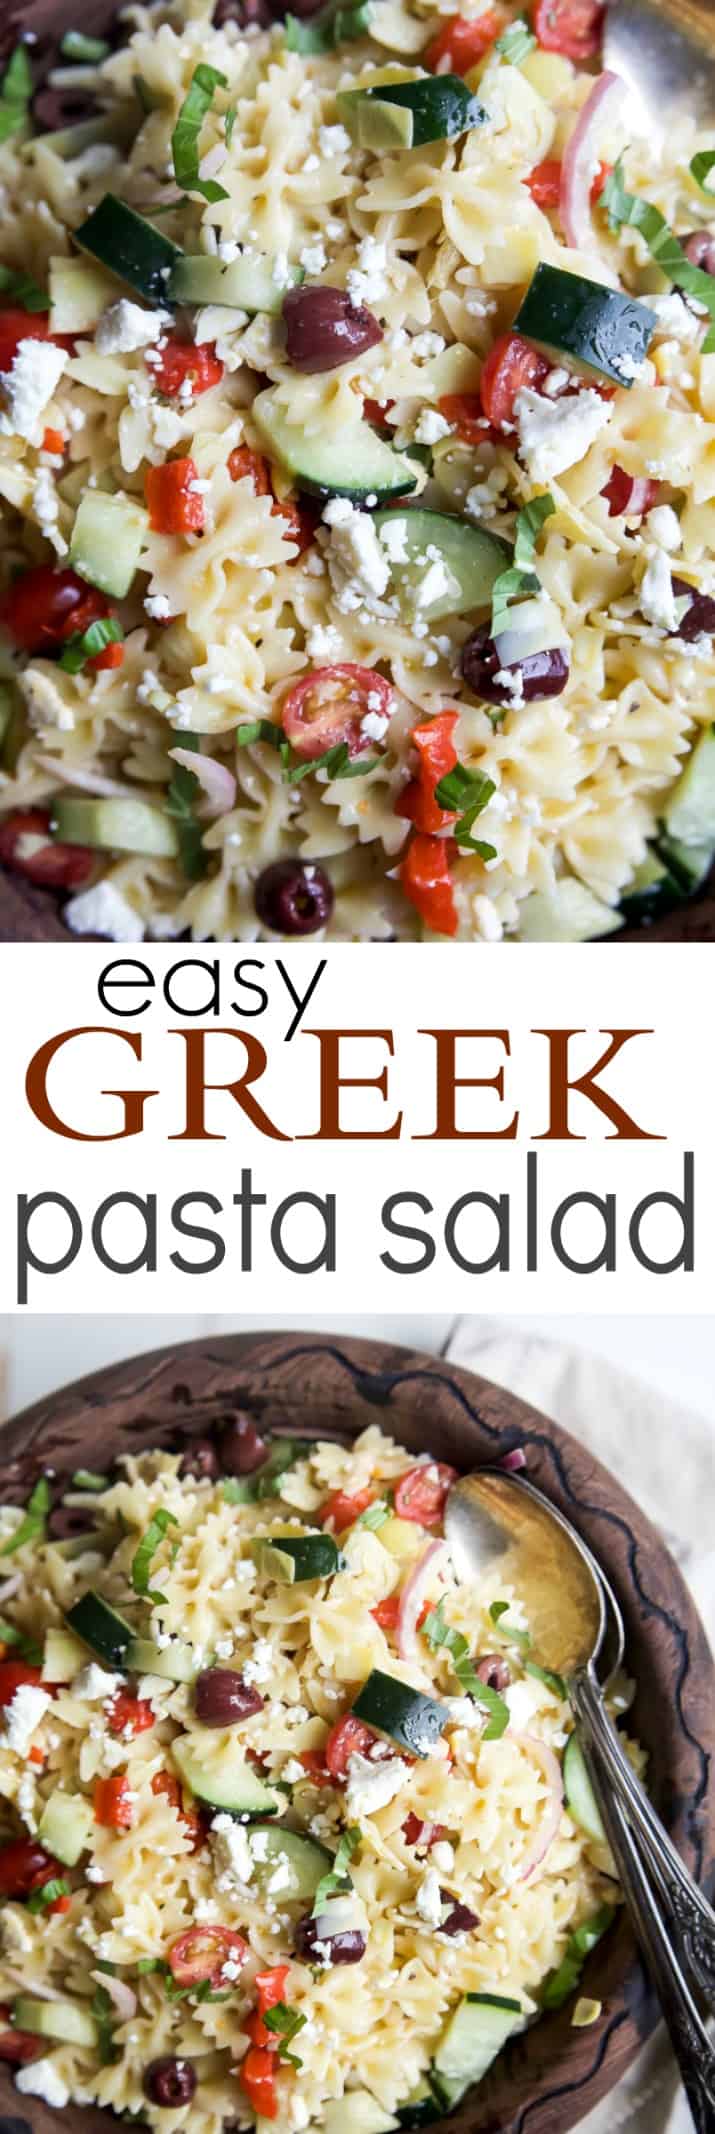 Easy Greek Pasta Salad Recipe collage